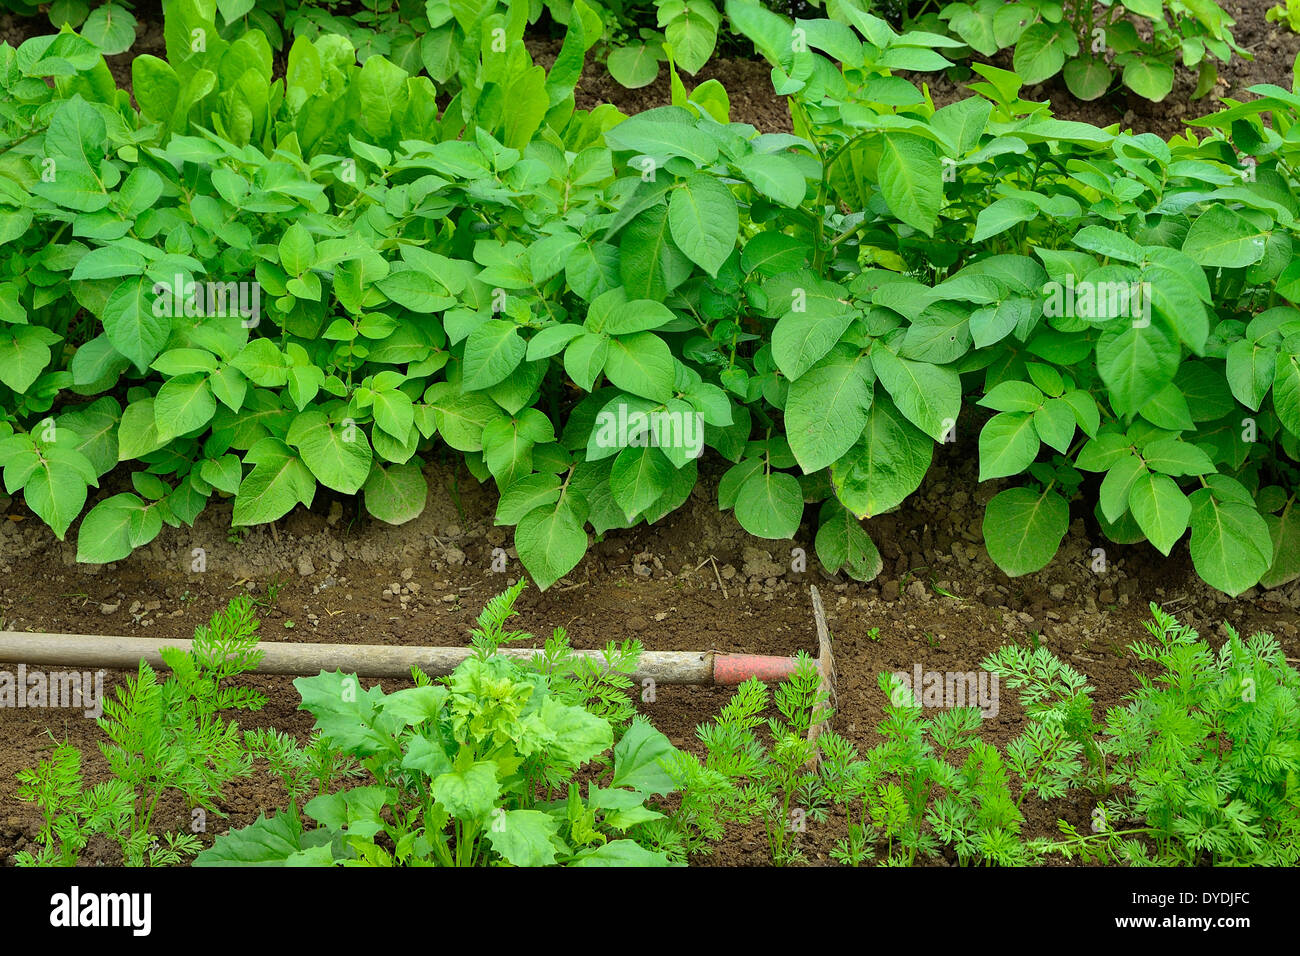 Row of potatoes in a garden in june. Stock Photo